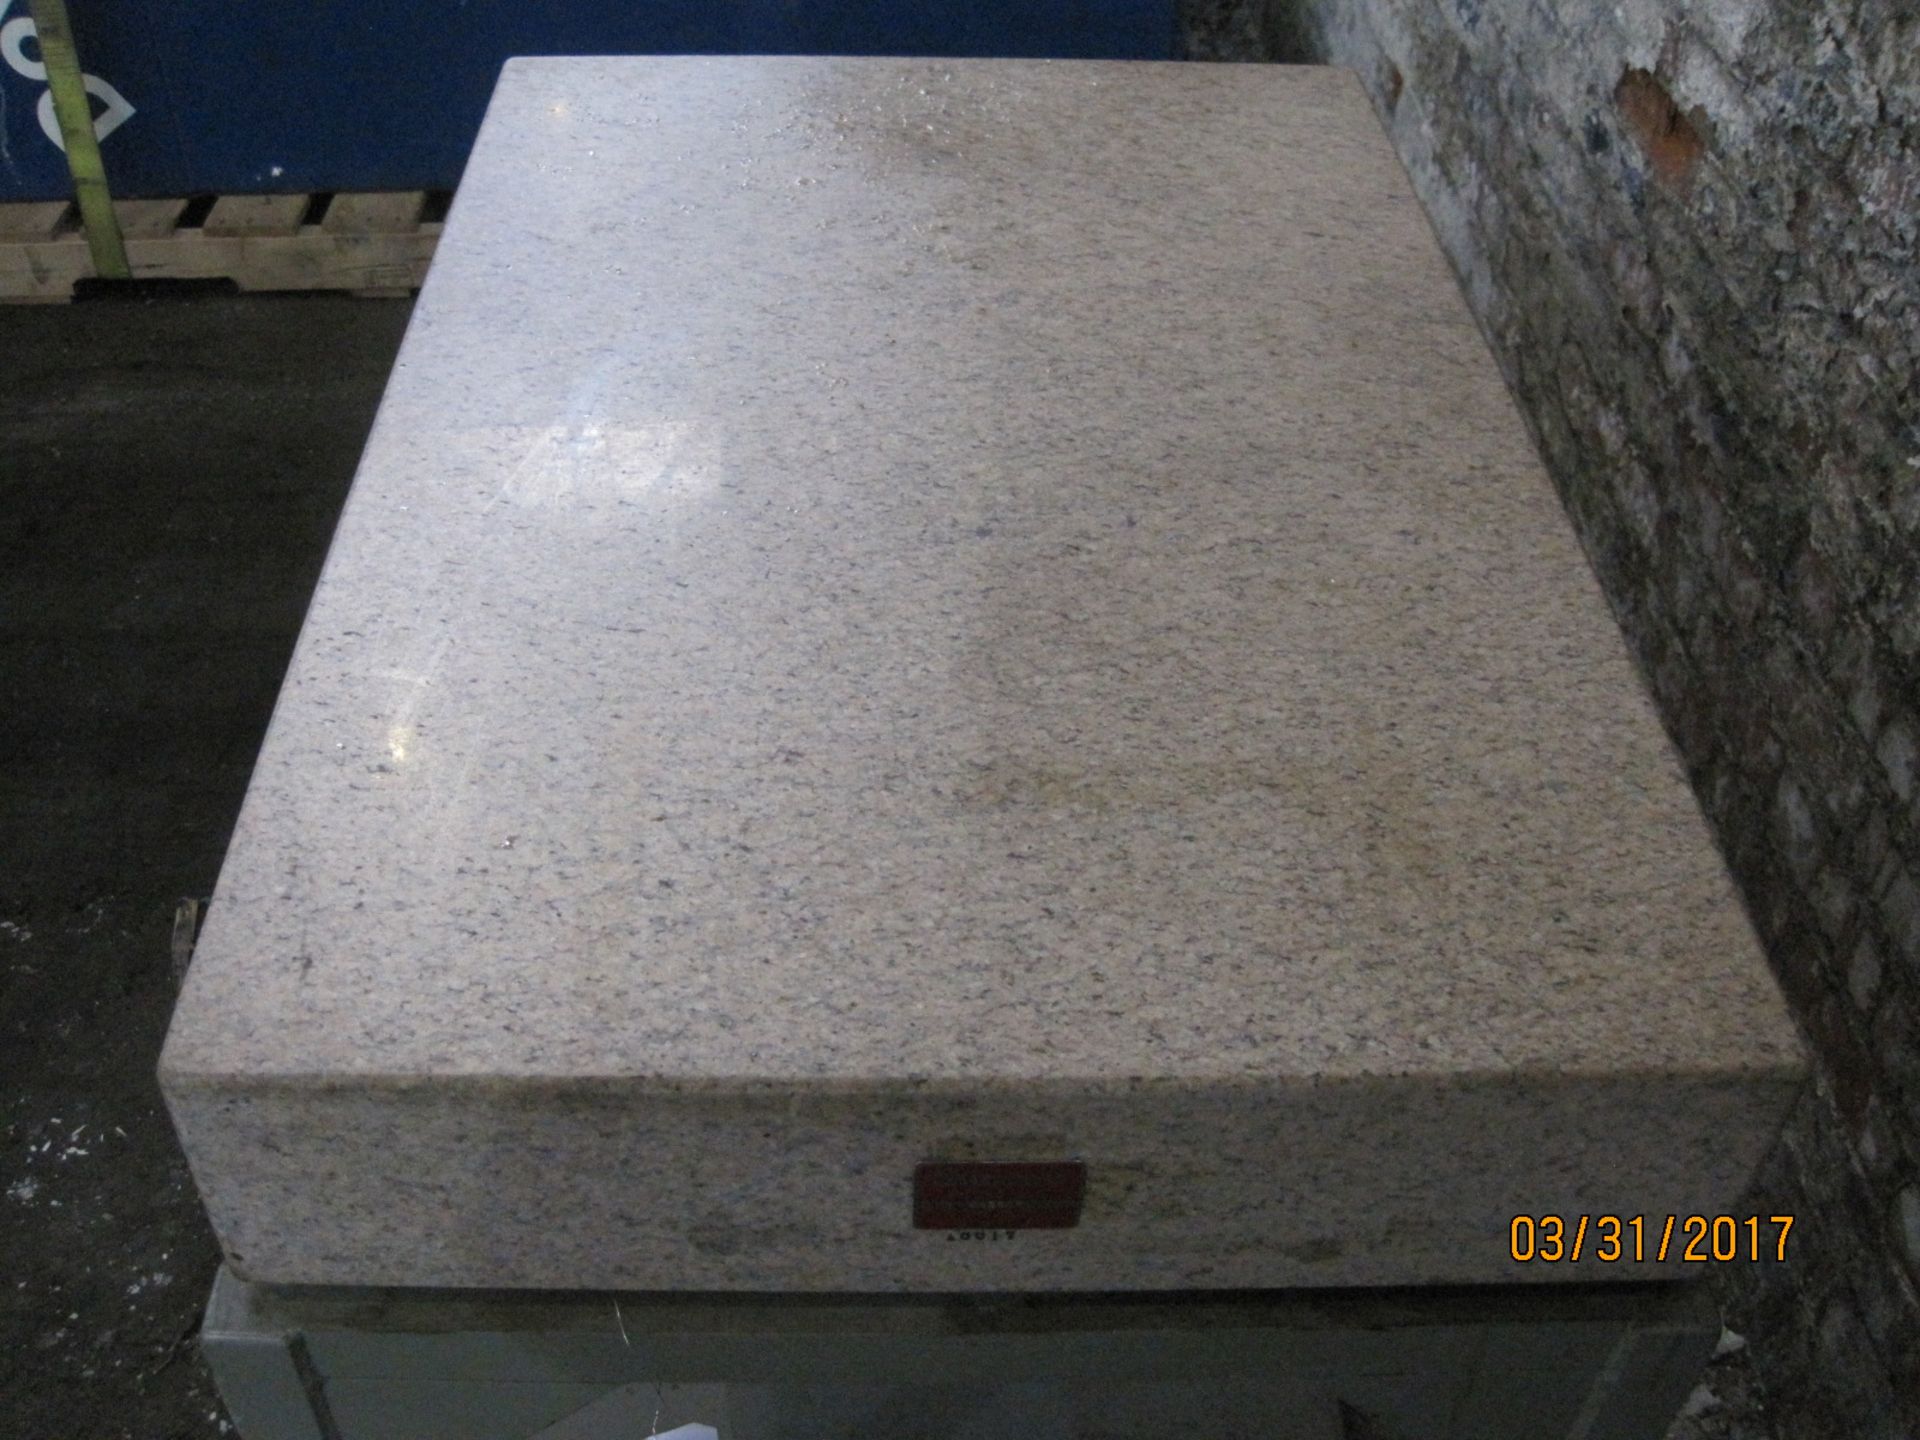 Starrett 36x24 Granite Surface Plate S/N 518617 - Image 2 of 3